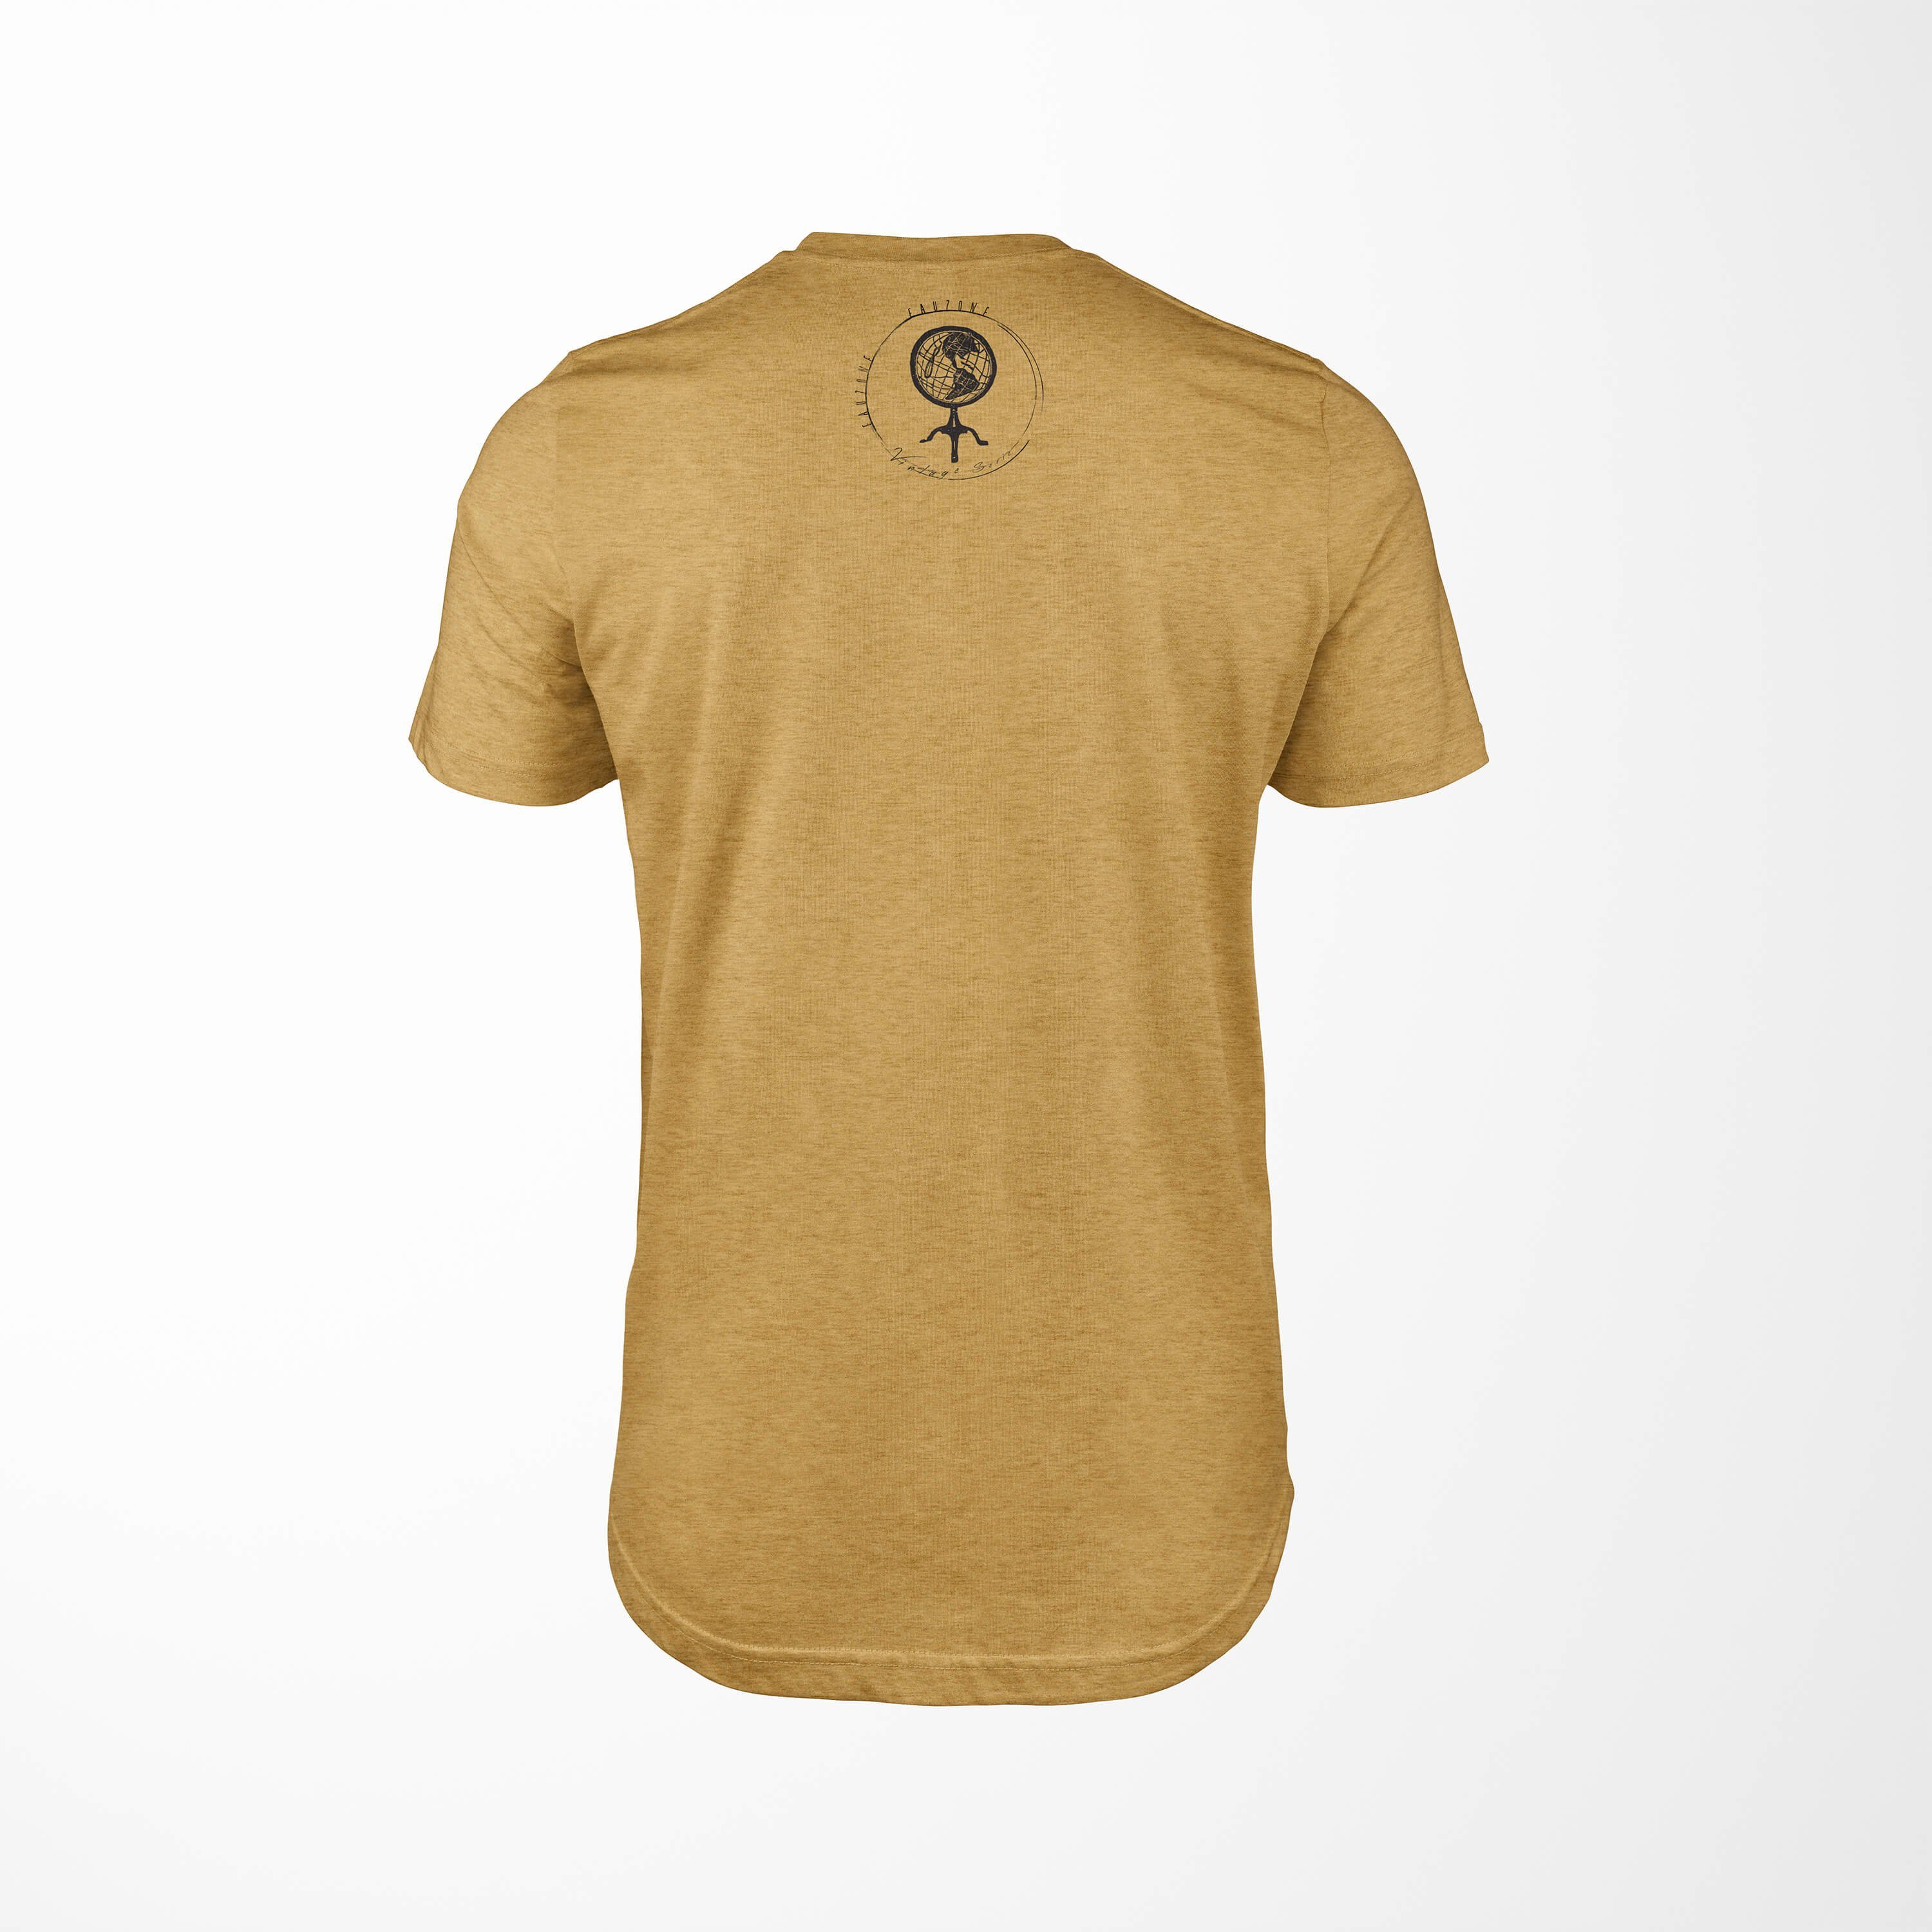 Sinus Art T-Shirt Vintage Gold T-Shirt Globus Herren Antique